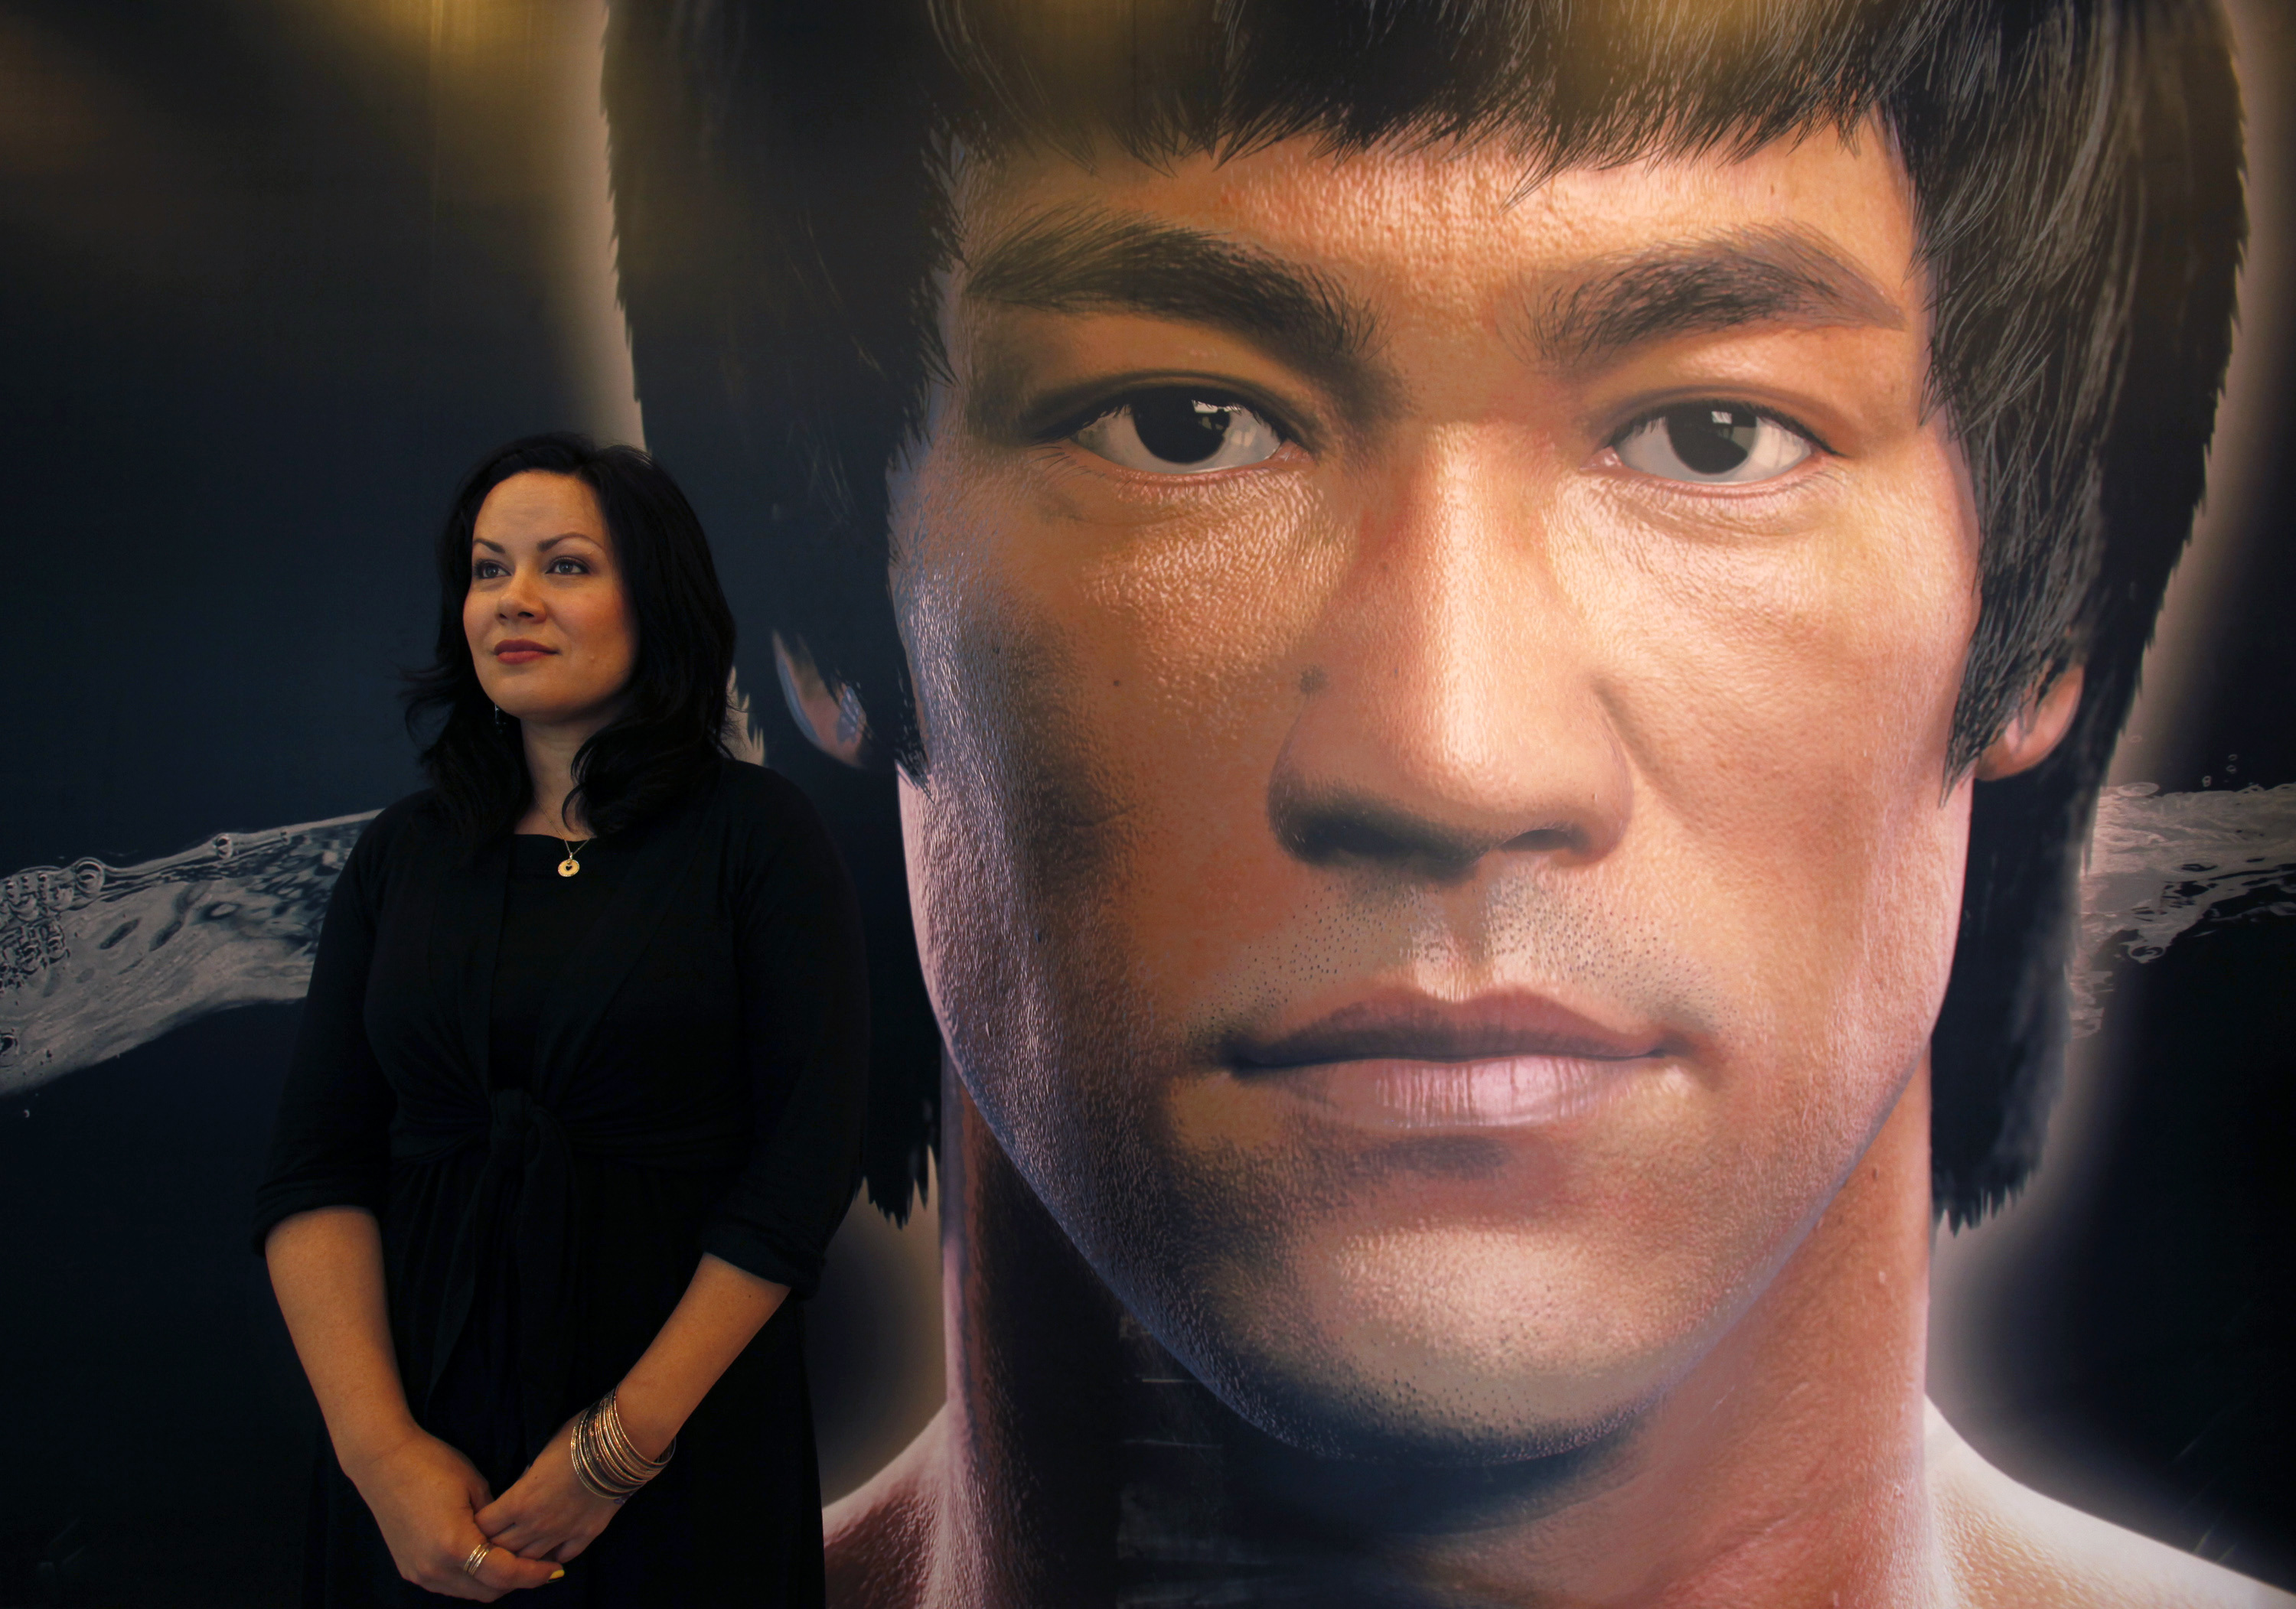 Seattle exhibit focuses on the philosophy of Bruce Lee | Reuters